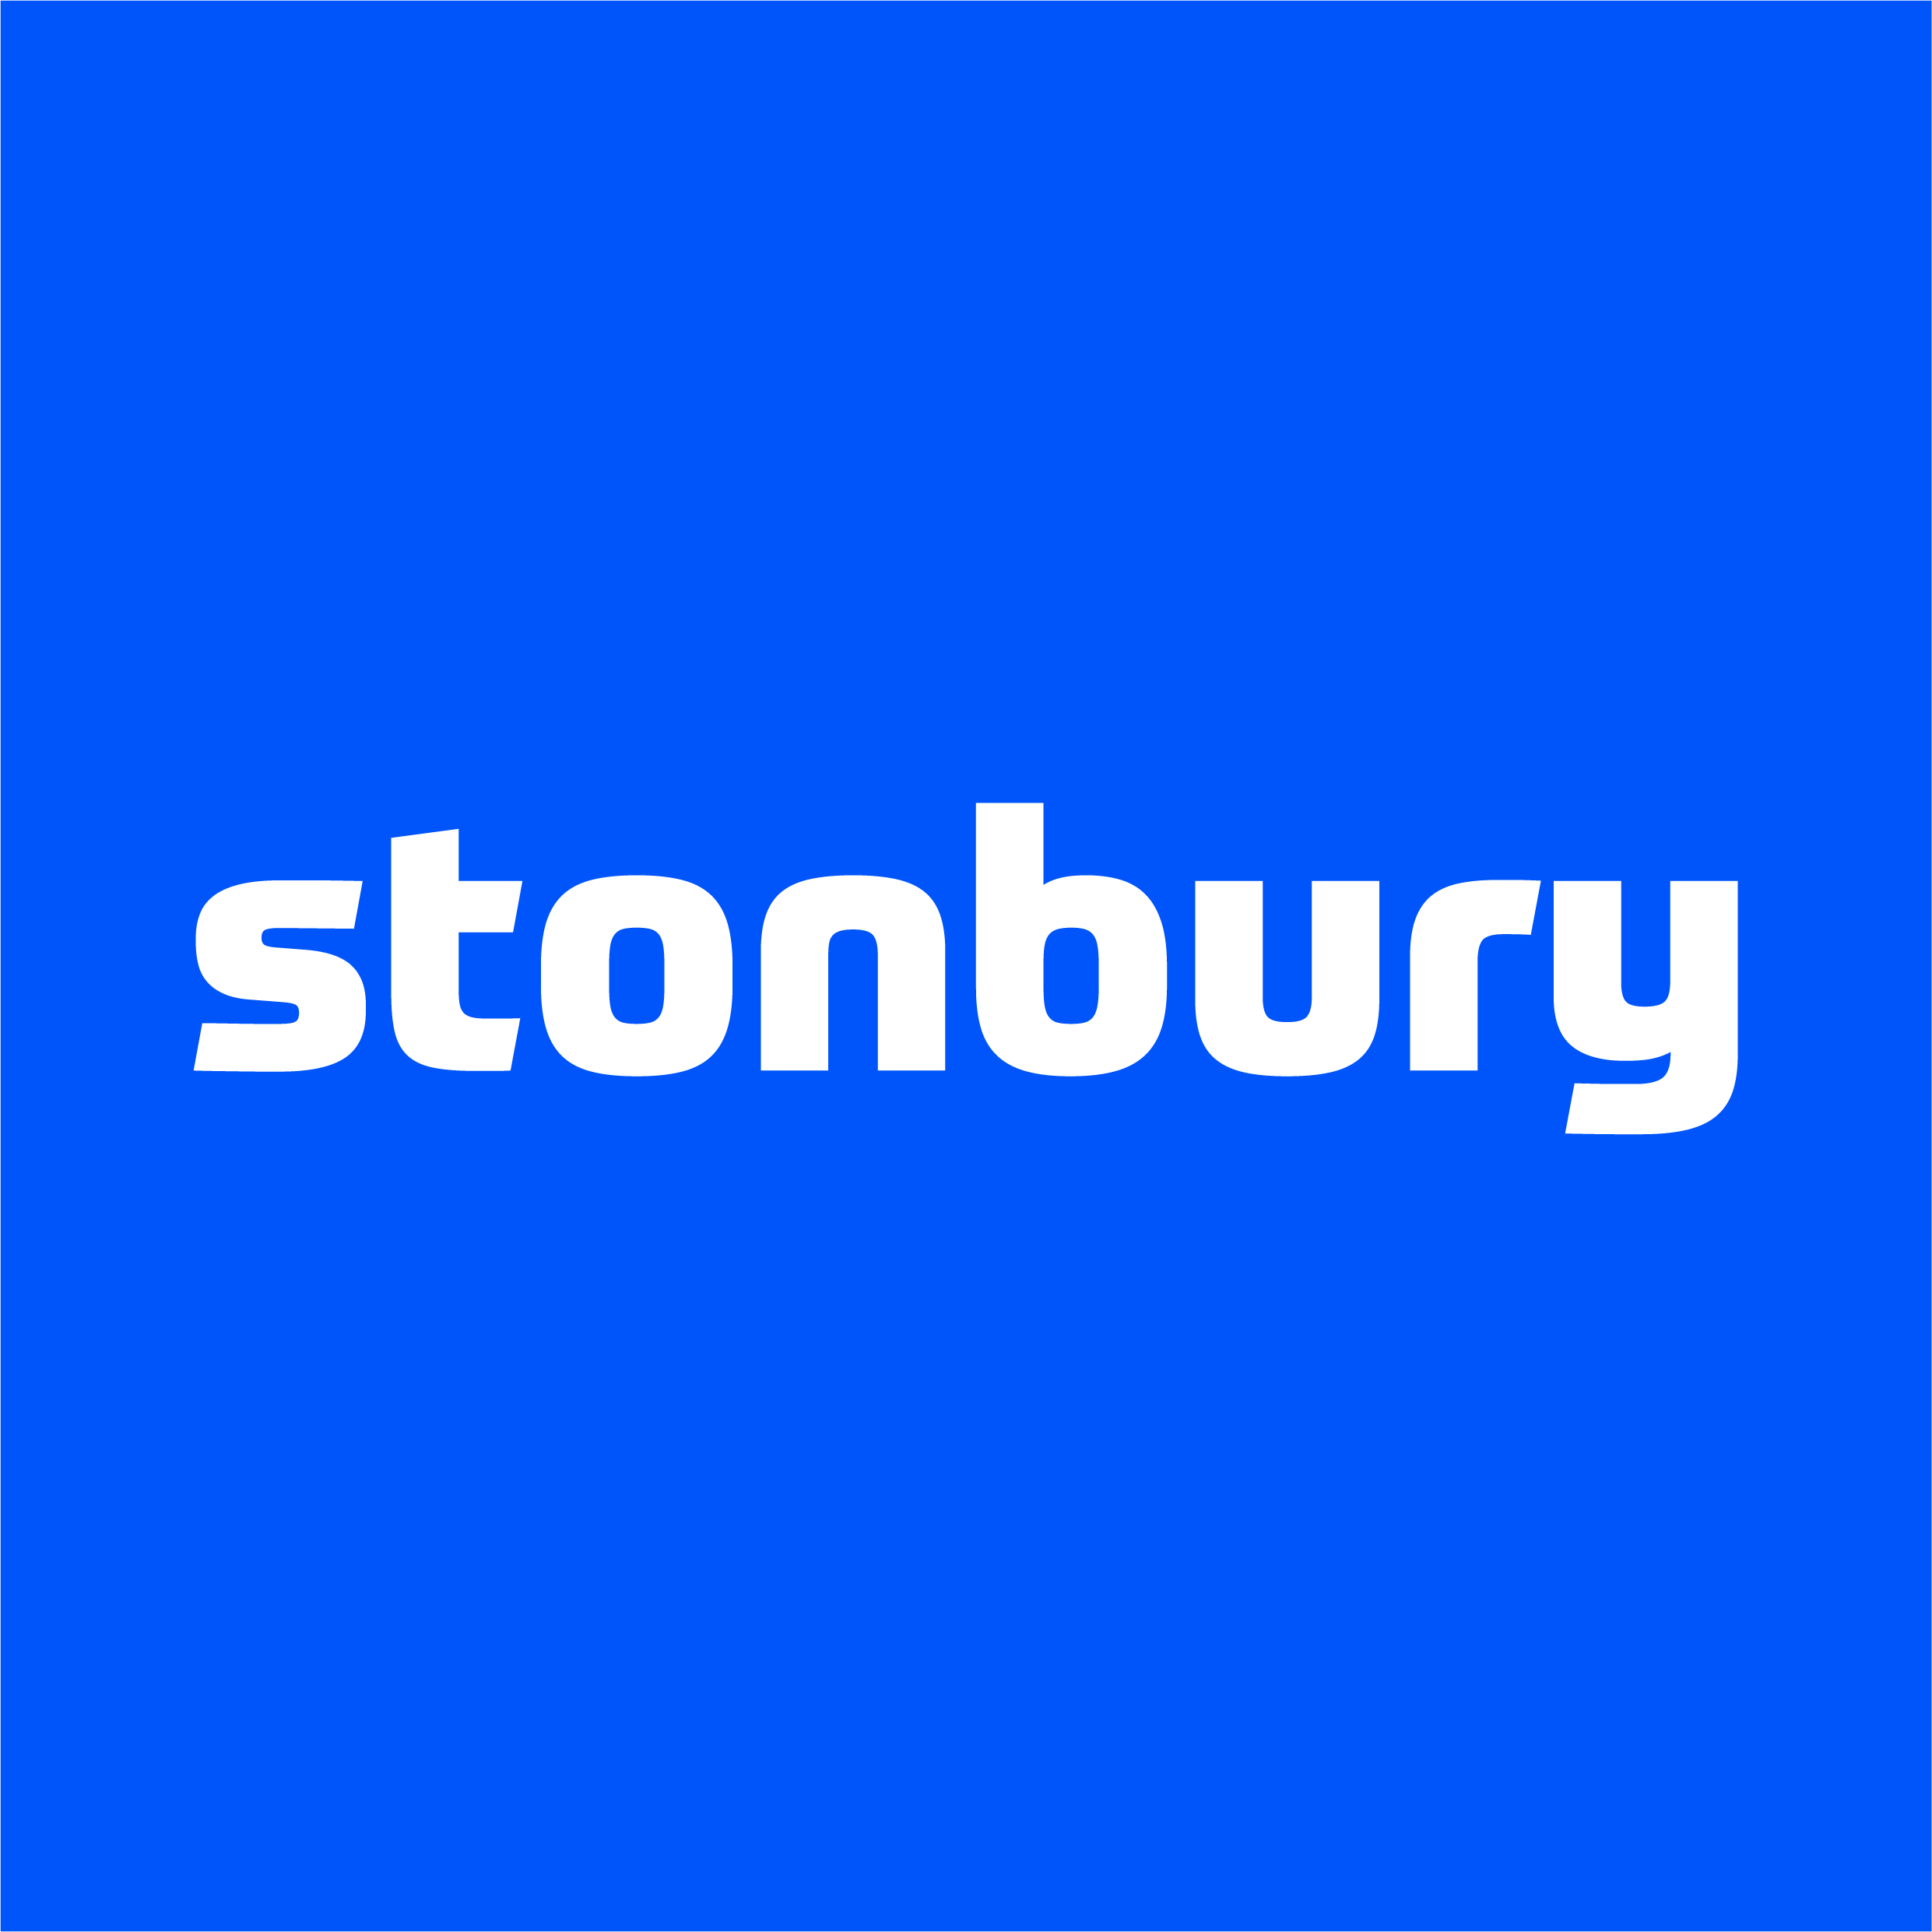 Stonbury - NWG Pre-Handback Management Inspection